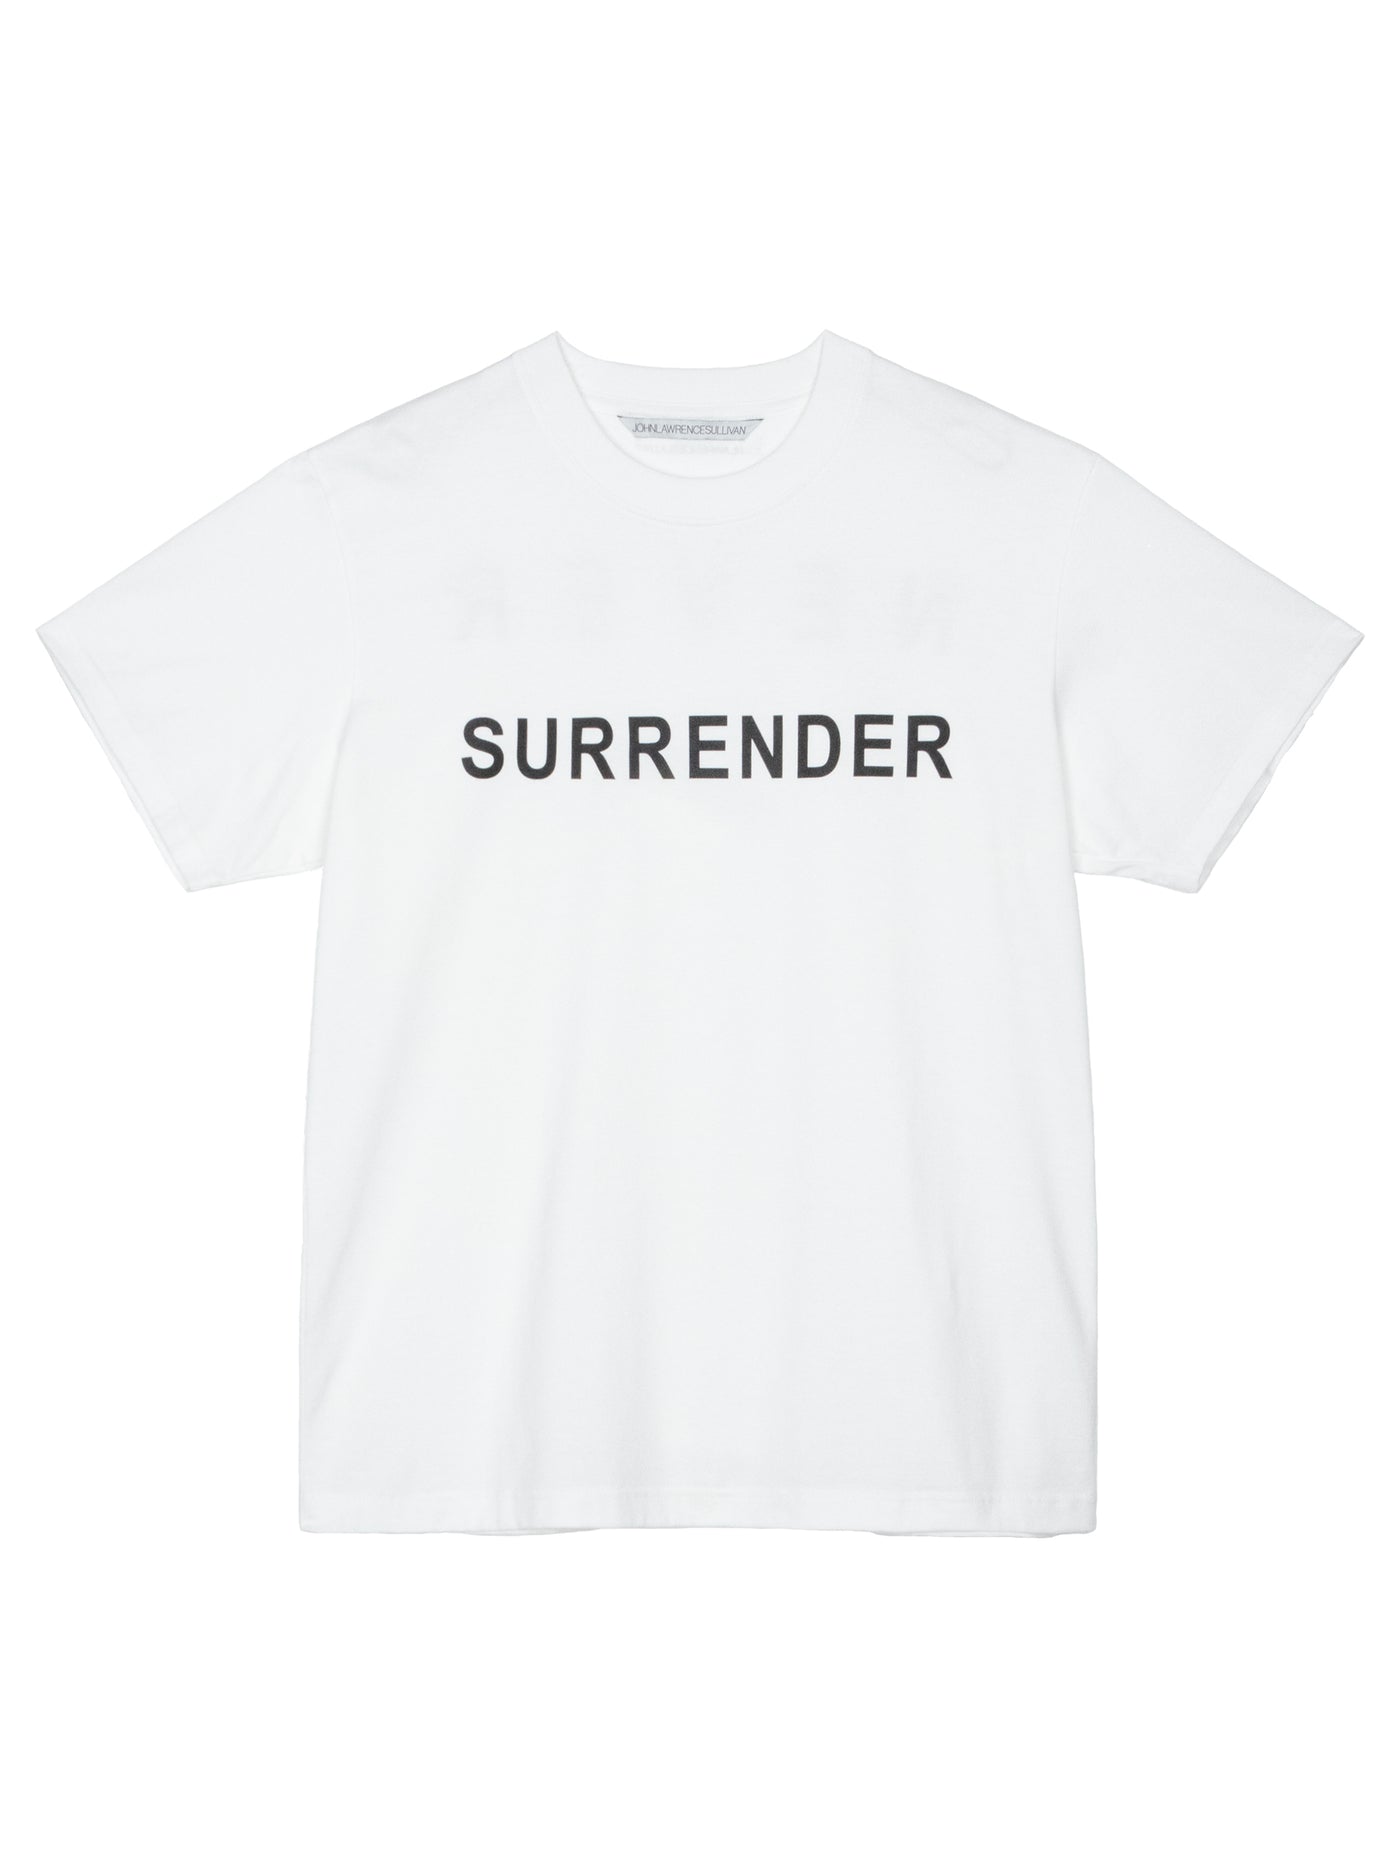 "NEVER SURRENDER" t-shirt